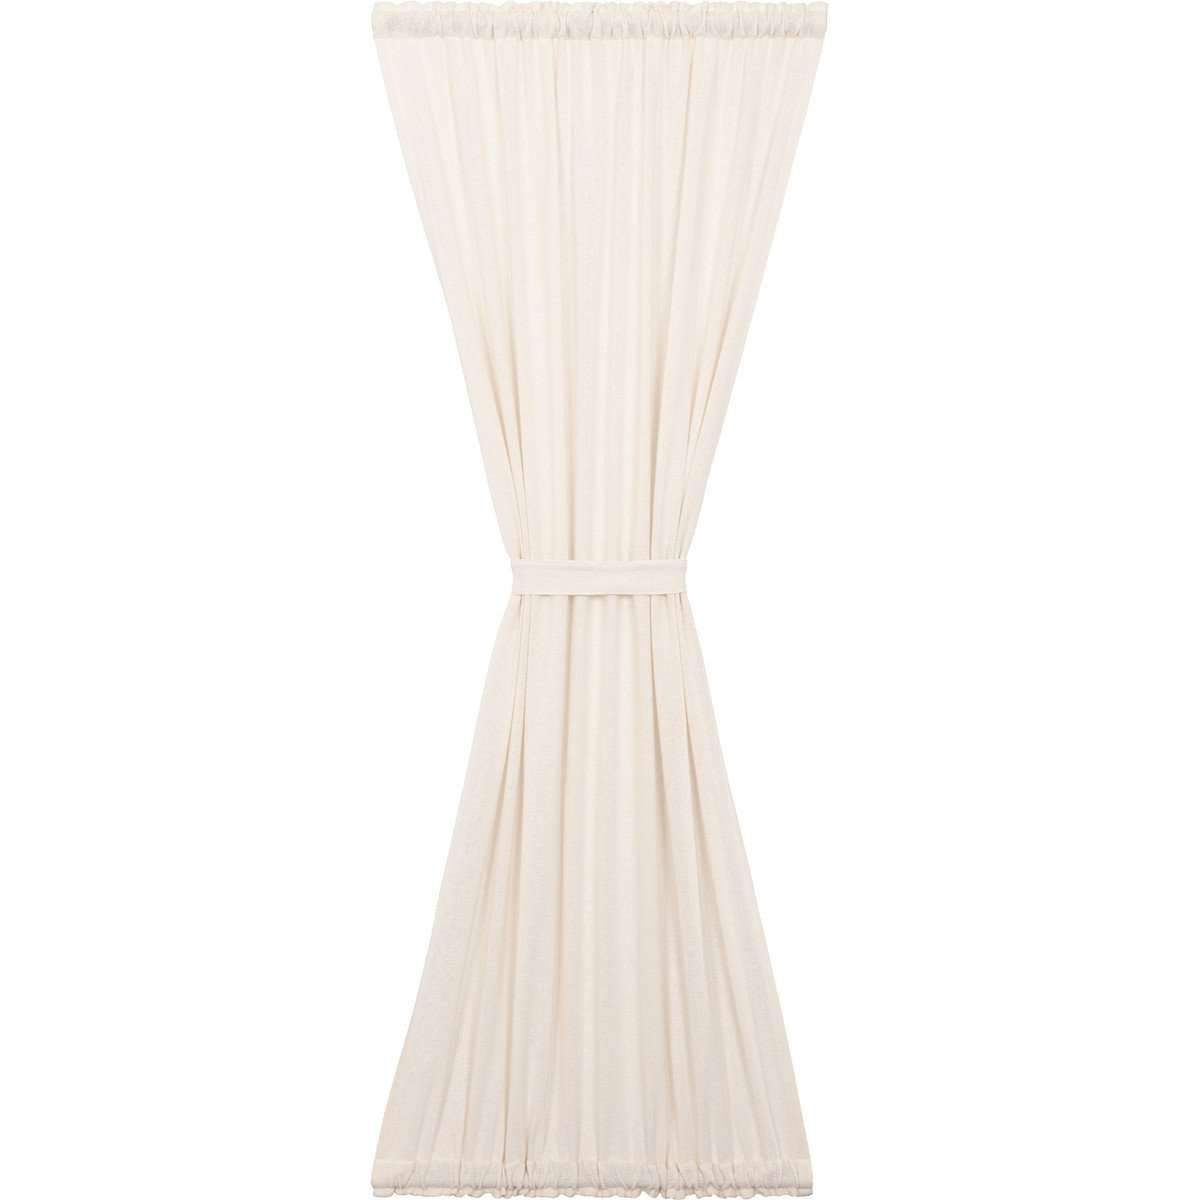 Burlap Vintage Tan/Antique White Door Panel 72"x40" curtain VHC Brands White 